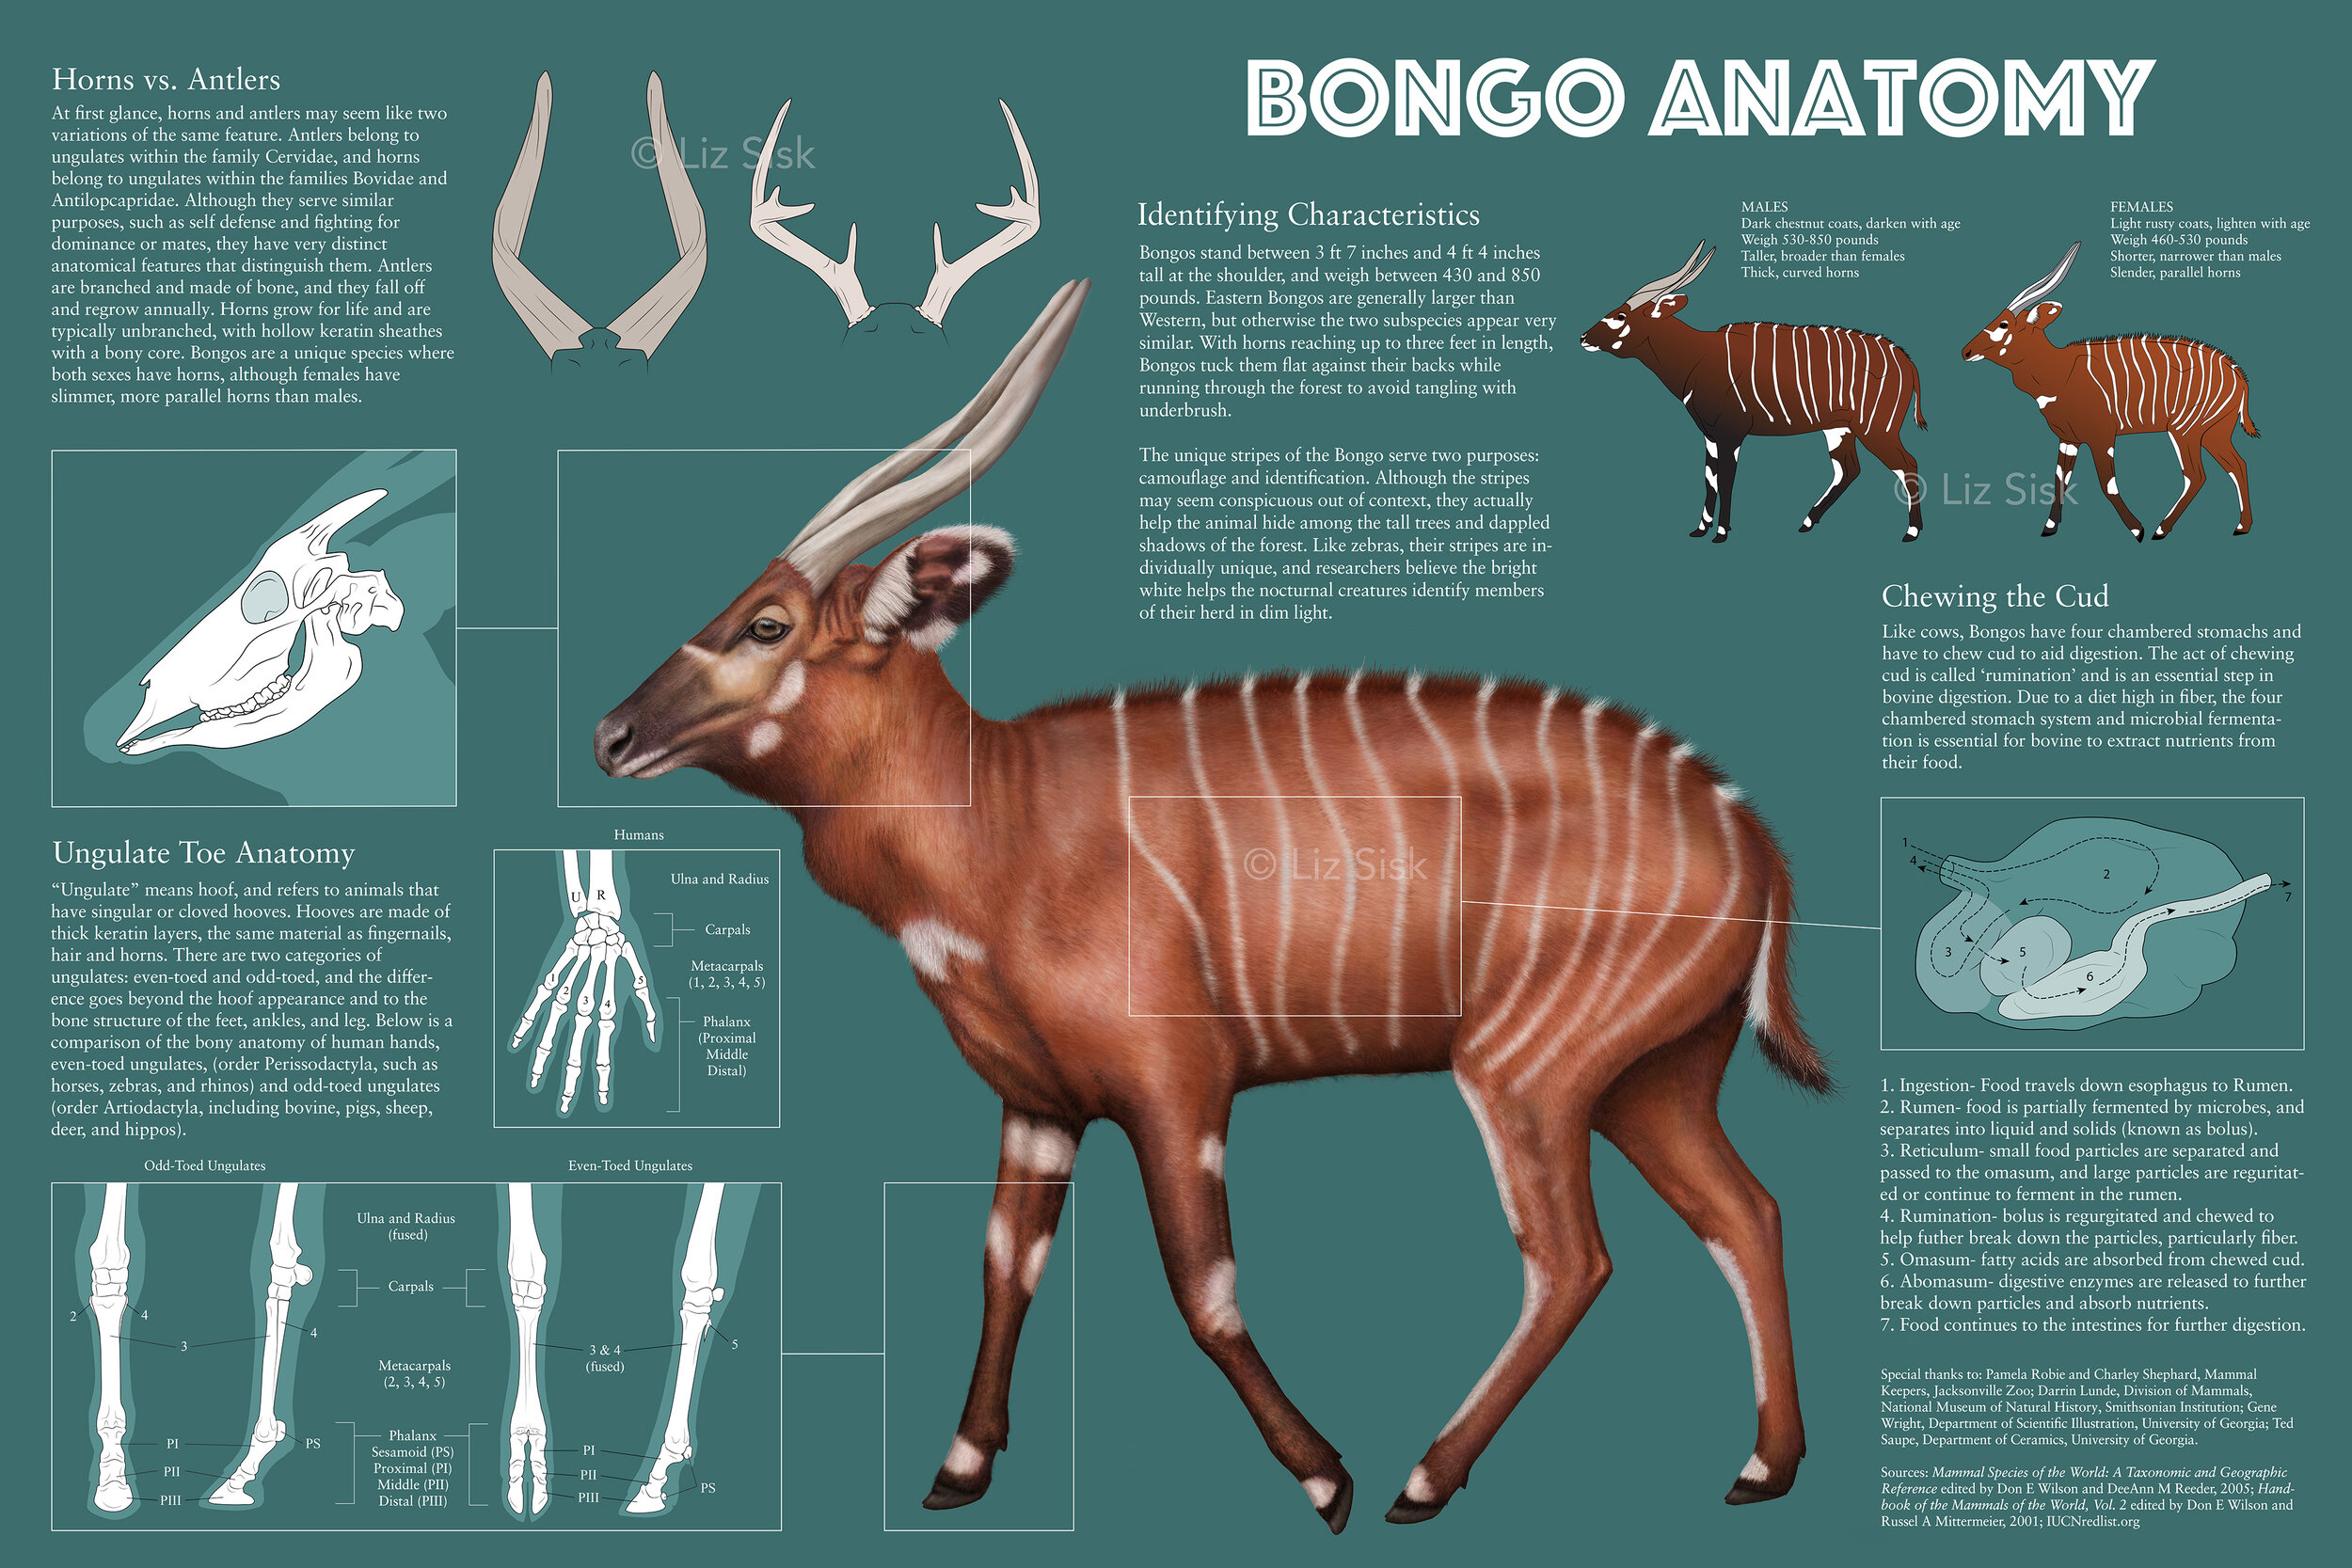 Bongo Anatomy Infographic, 2019